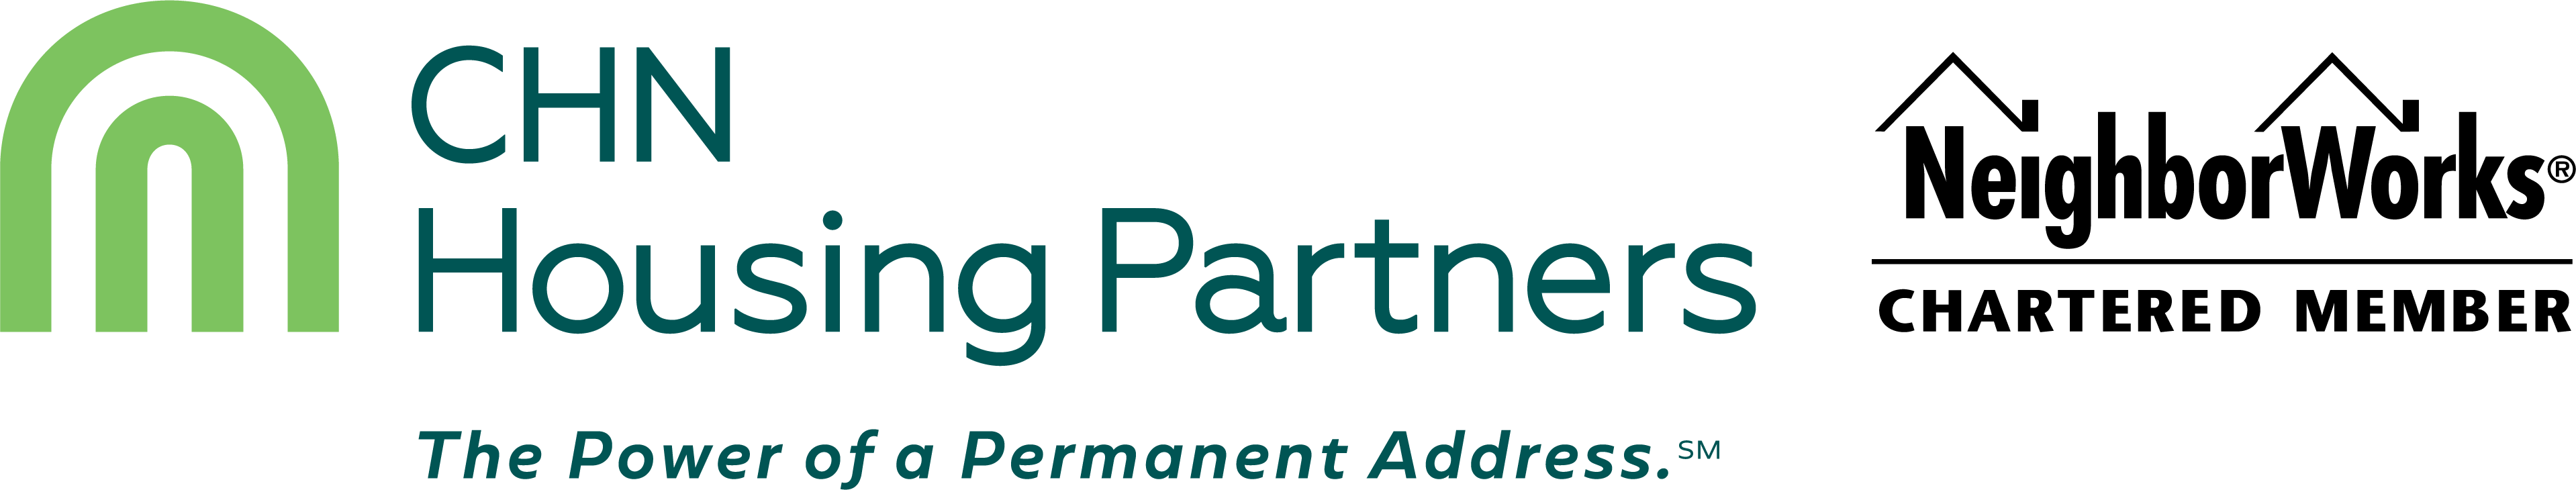 CHN Housing Partners Company Logo